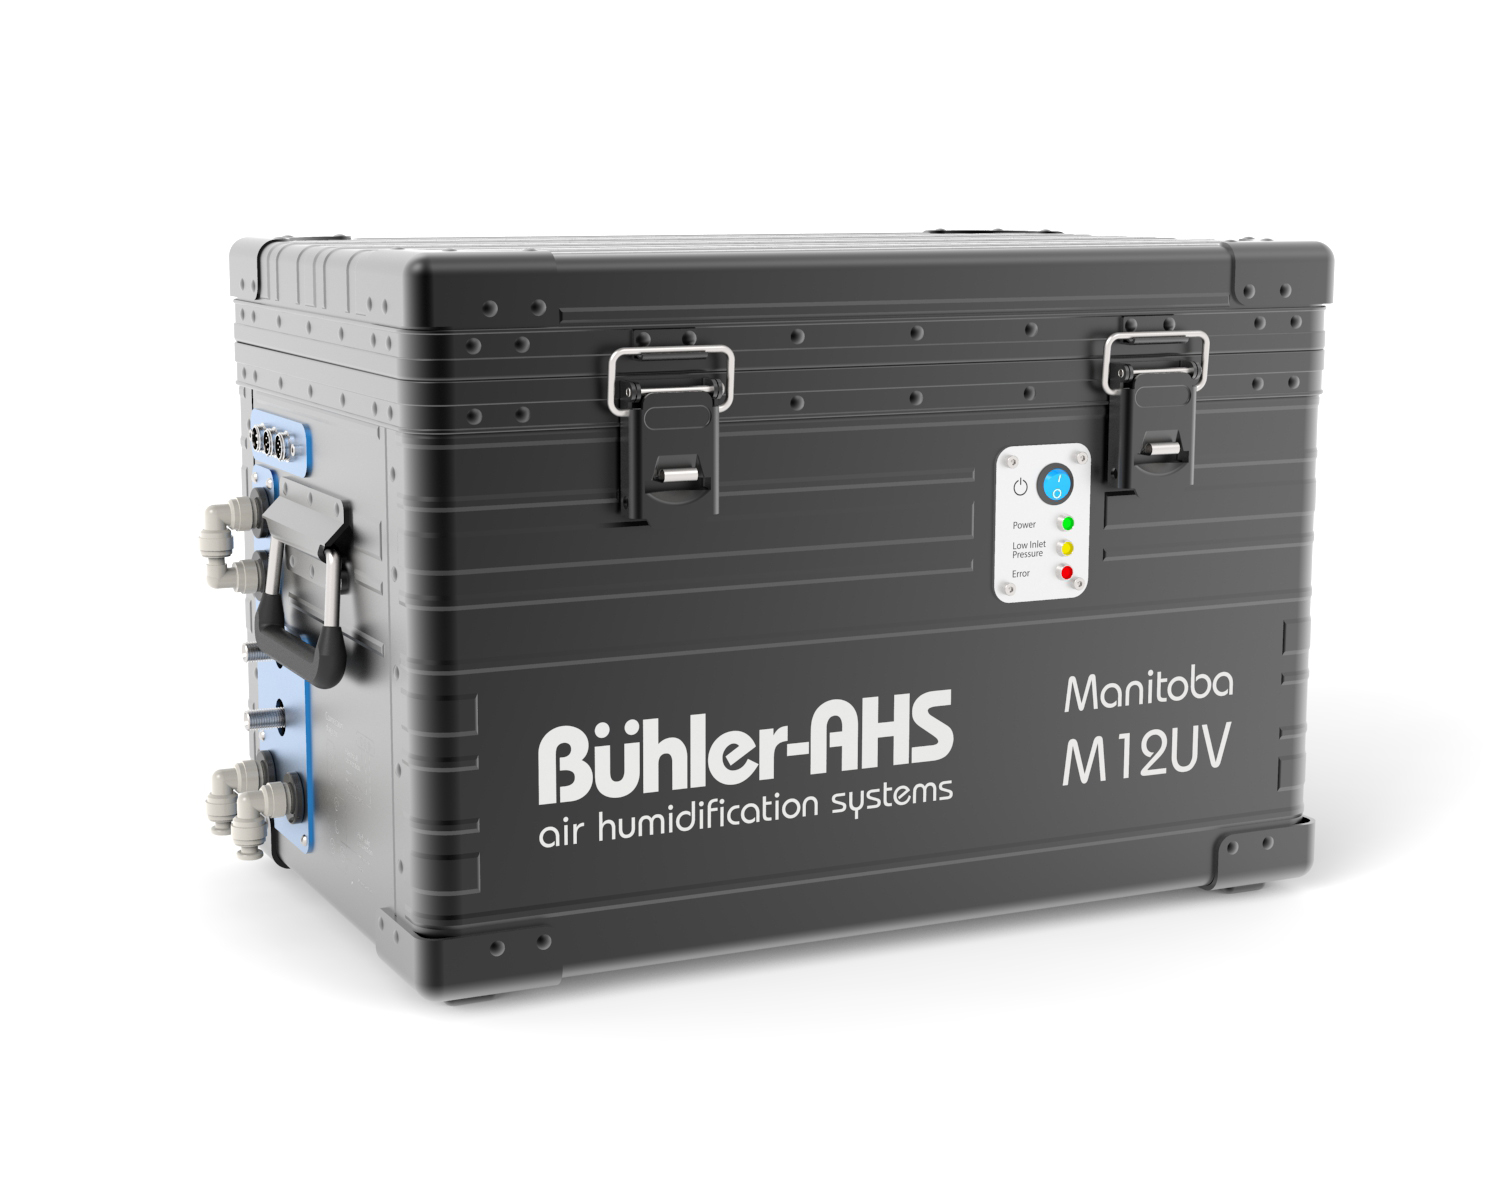 Buhler-AHS Central module M12UV